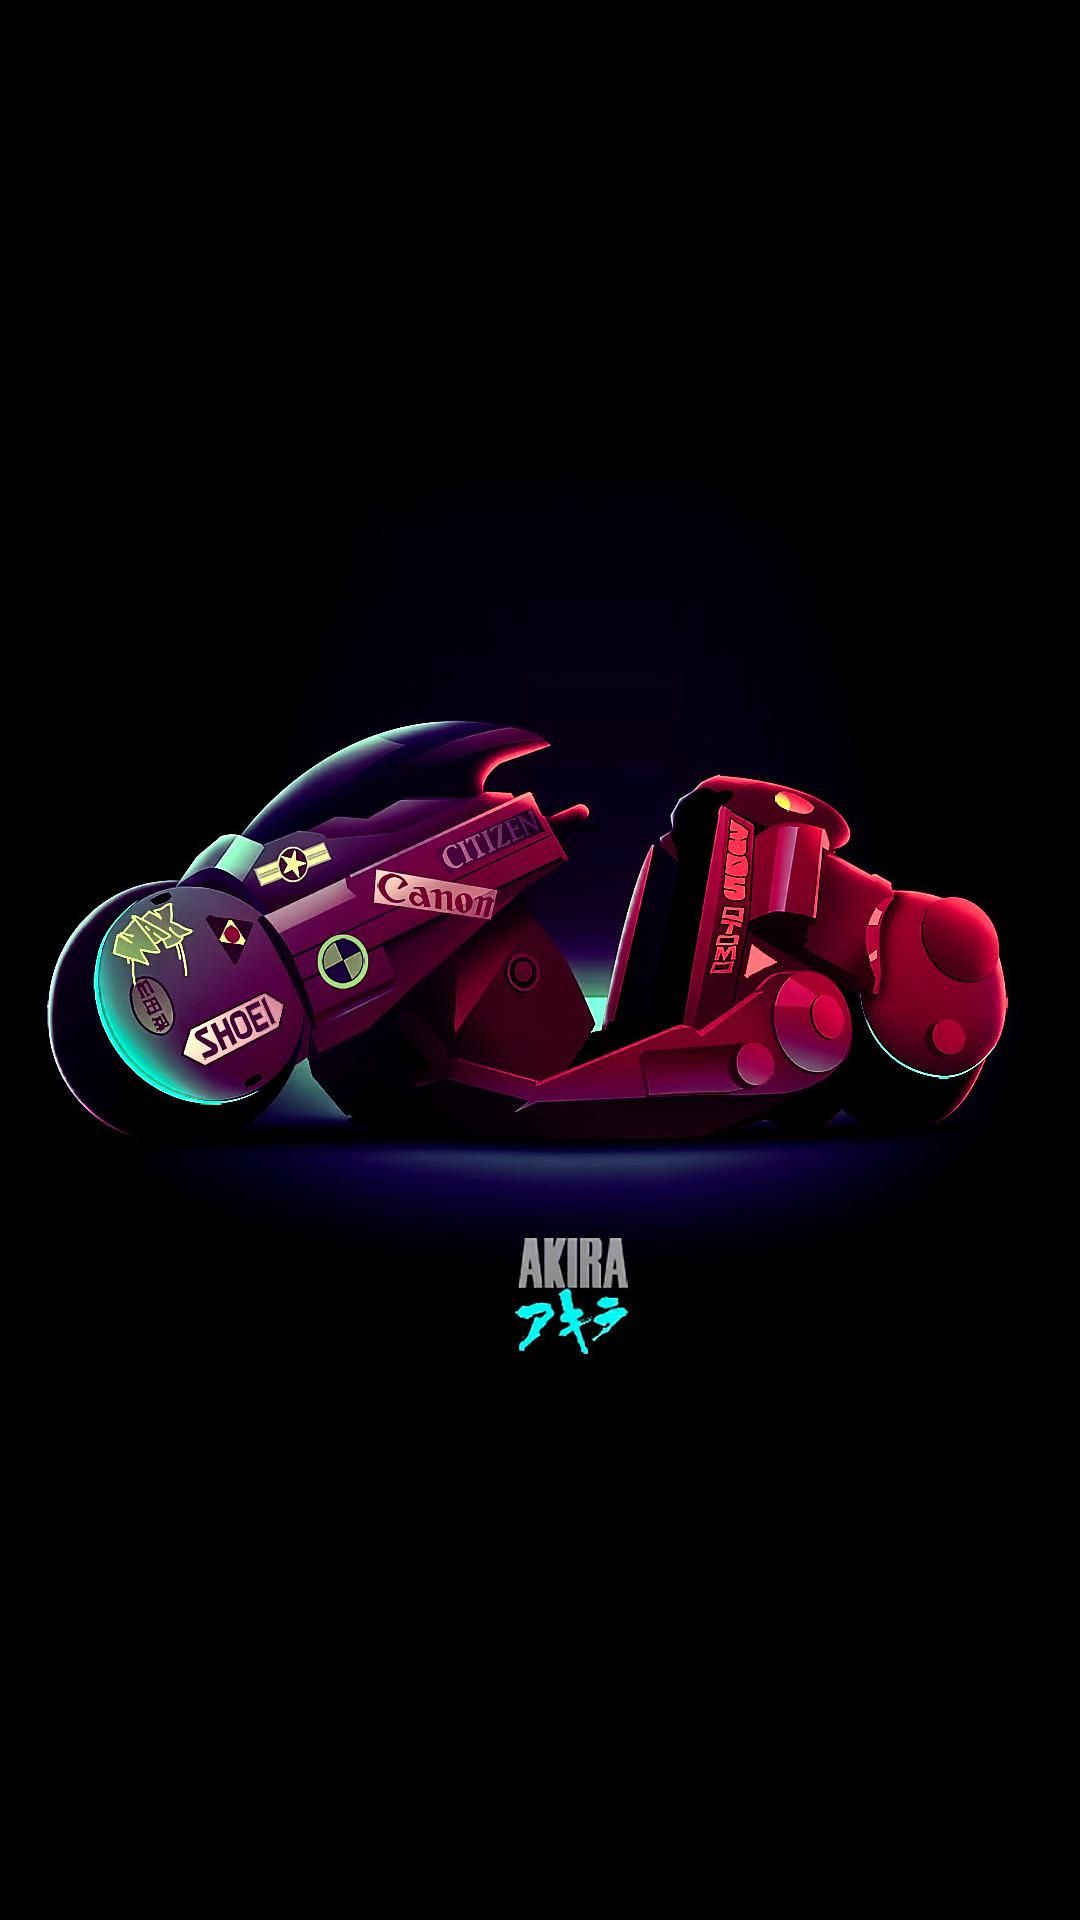 akira iphone wallpaper,automotive design,violet,car,magenta,vehicle